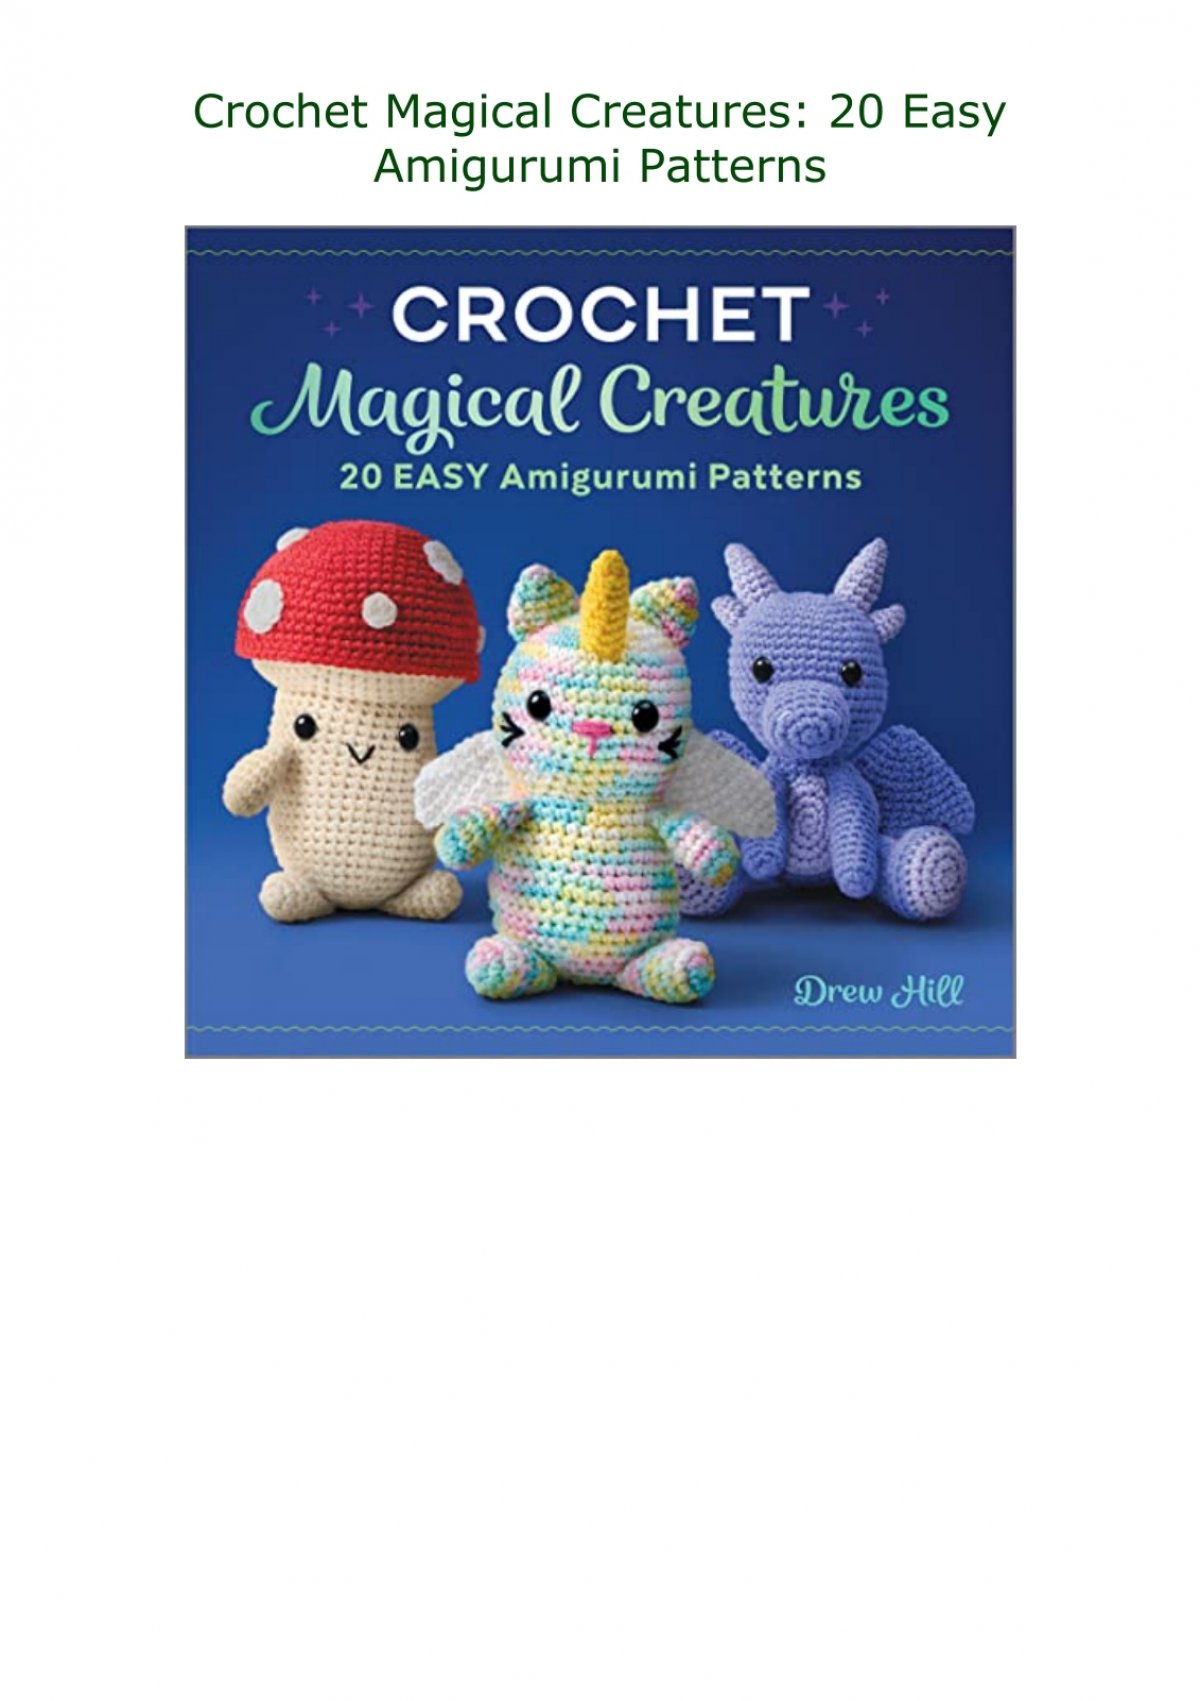 Crochet Magical Creatures: 20 Easy Amigurumi Patterns: Hill, Drew